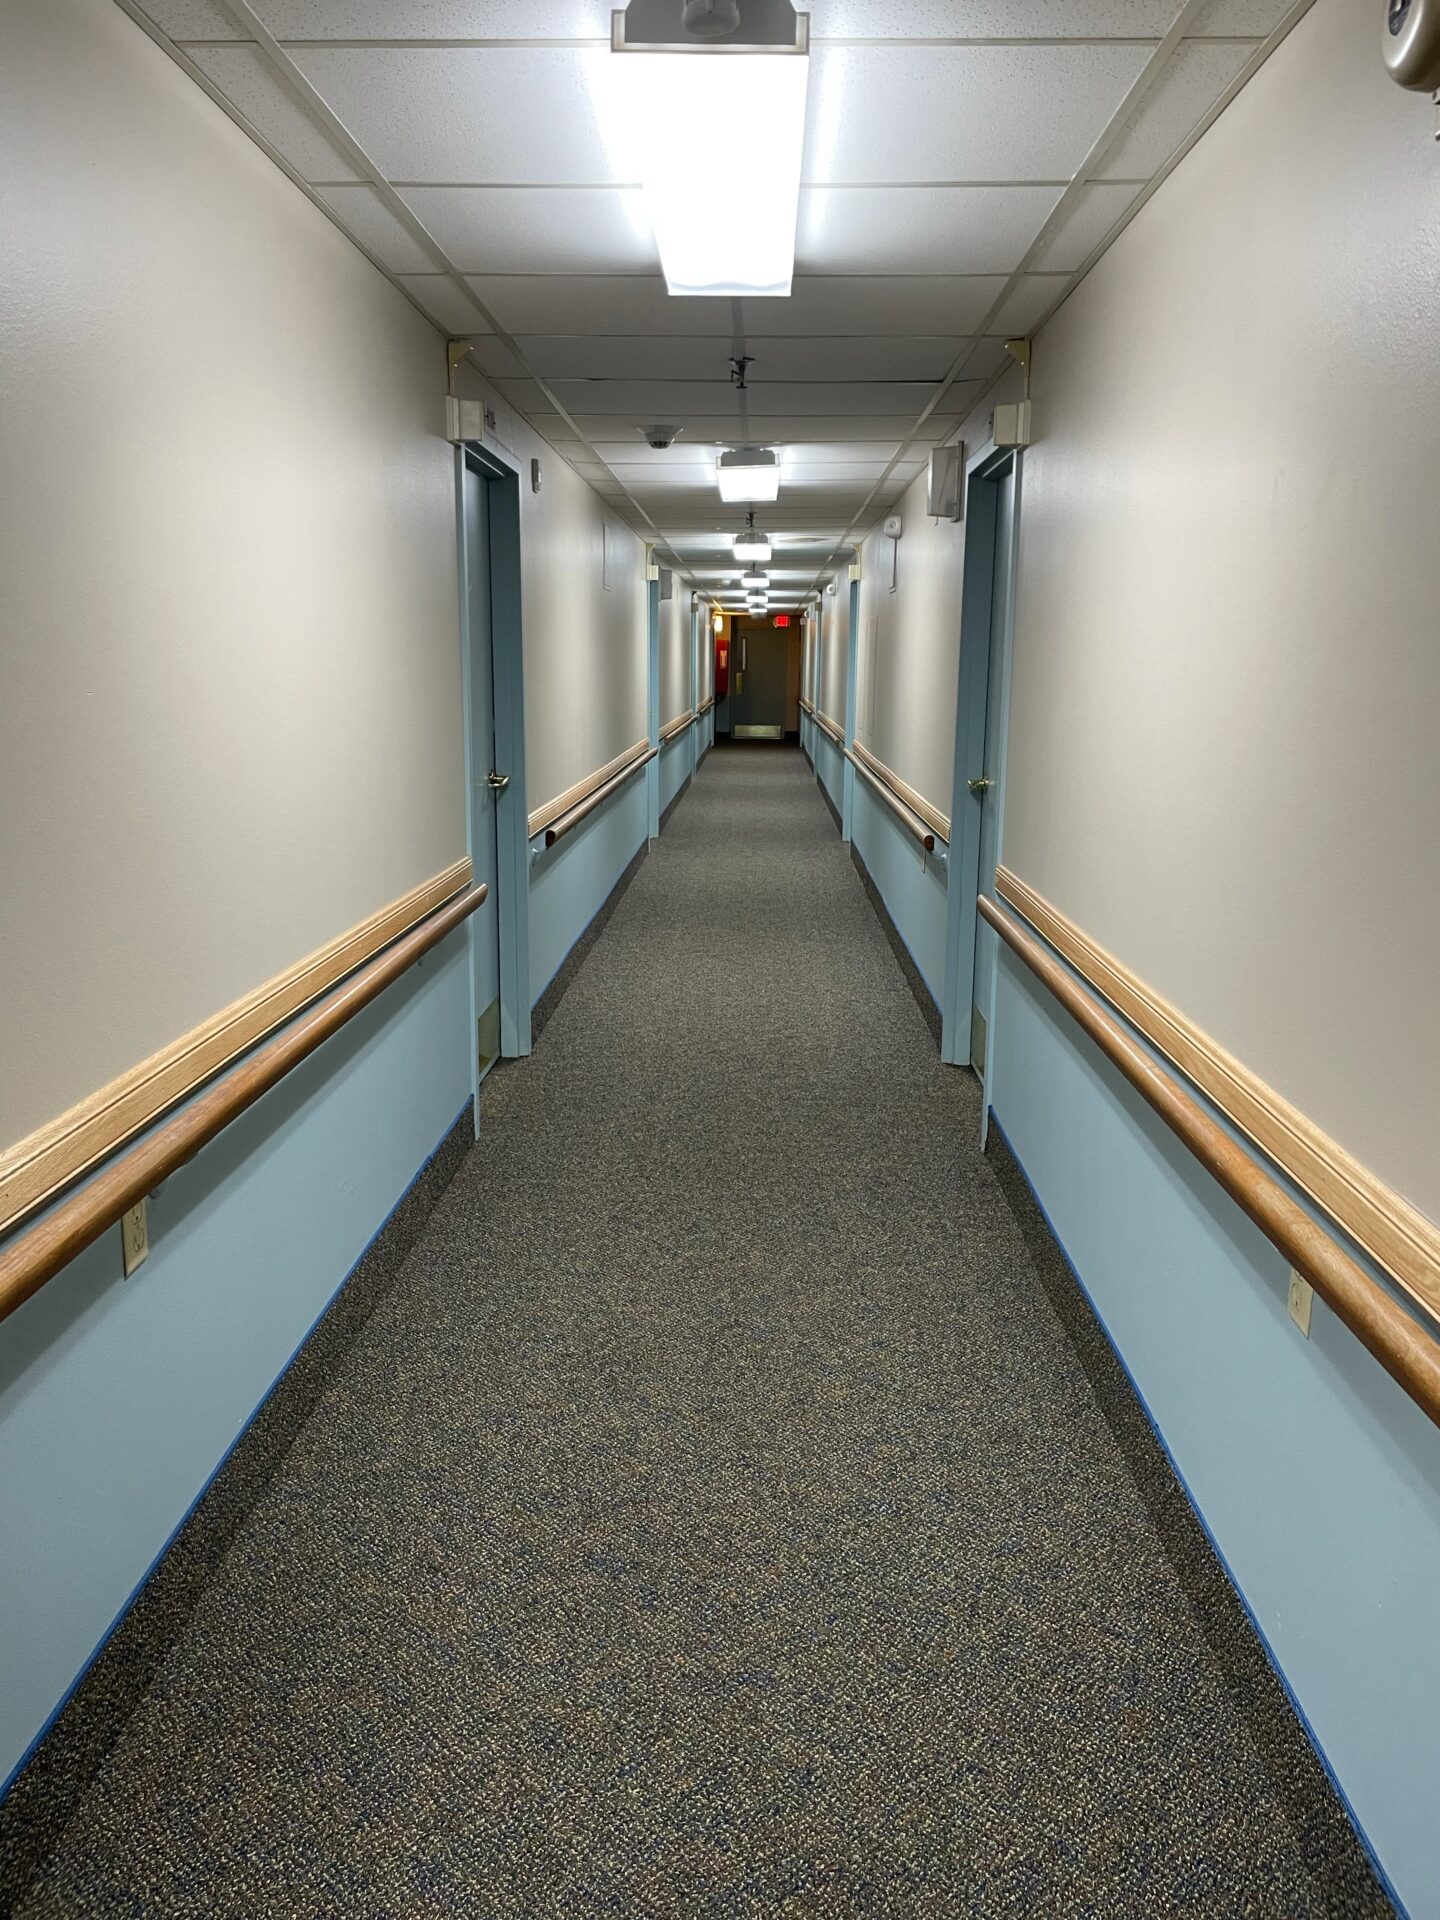 Pine Oak Apartments interior corridor and doors